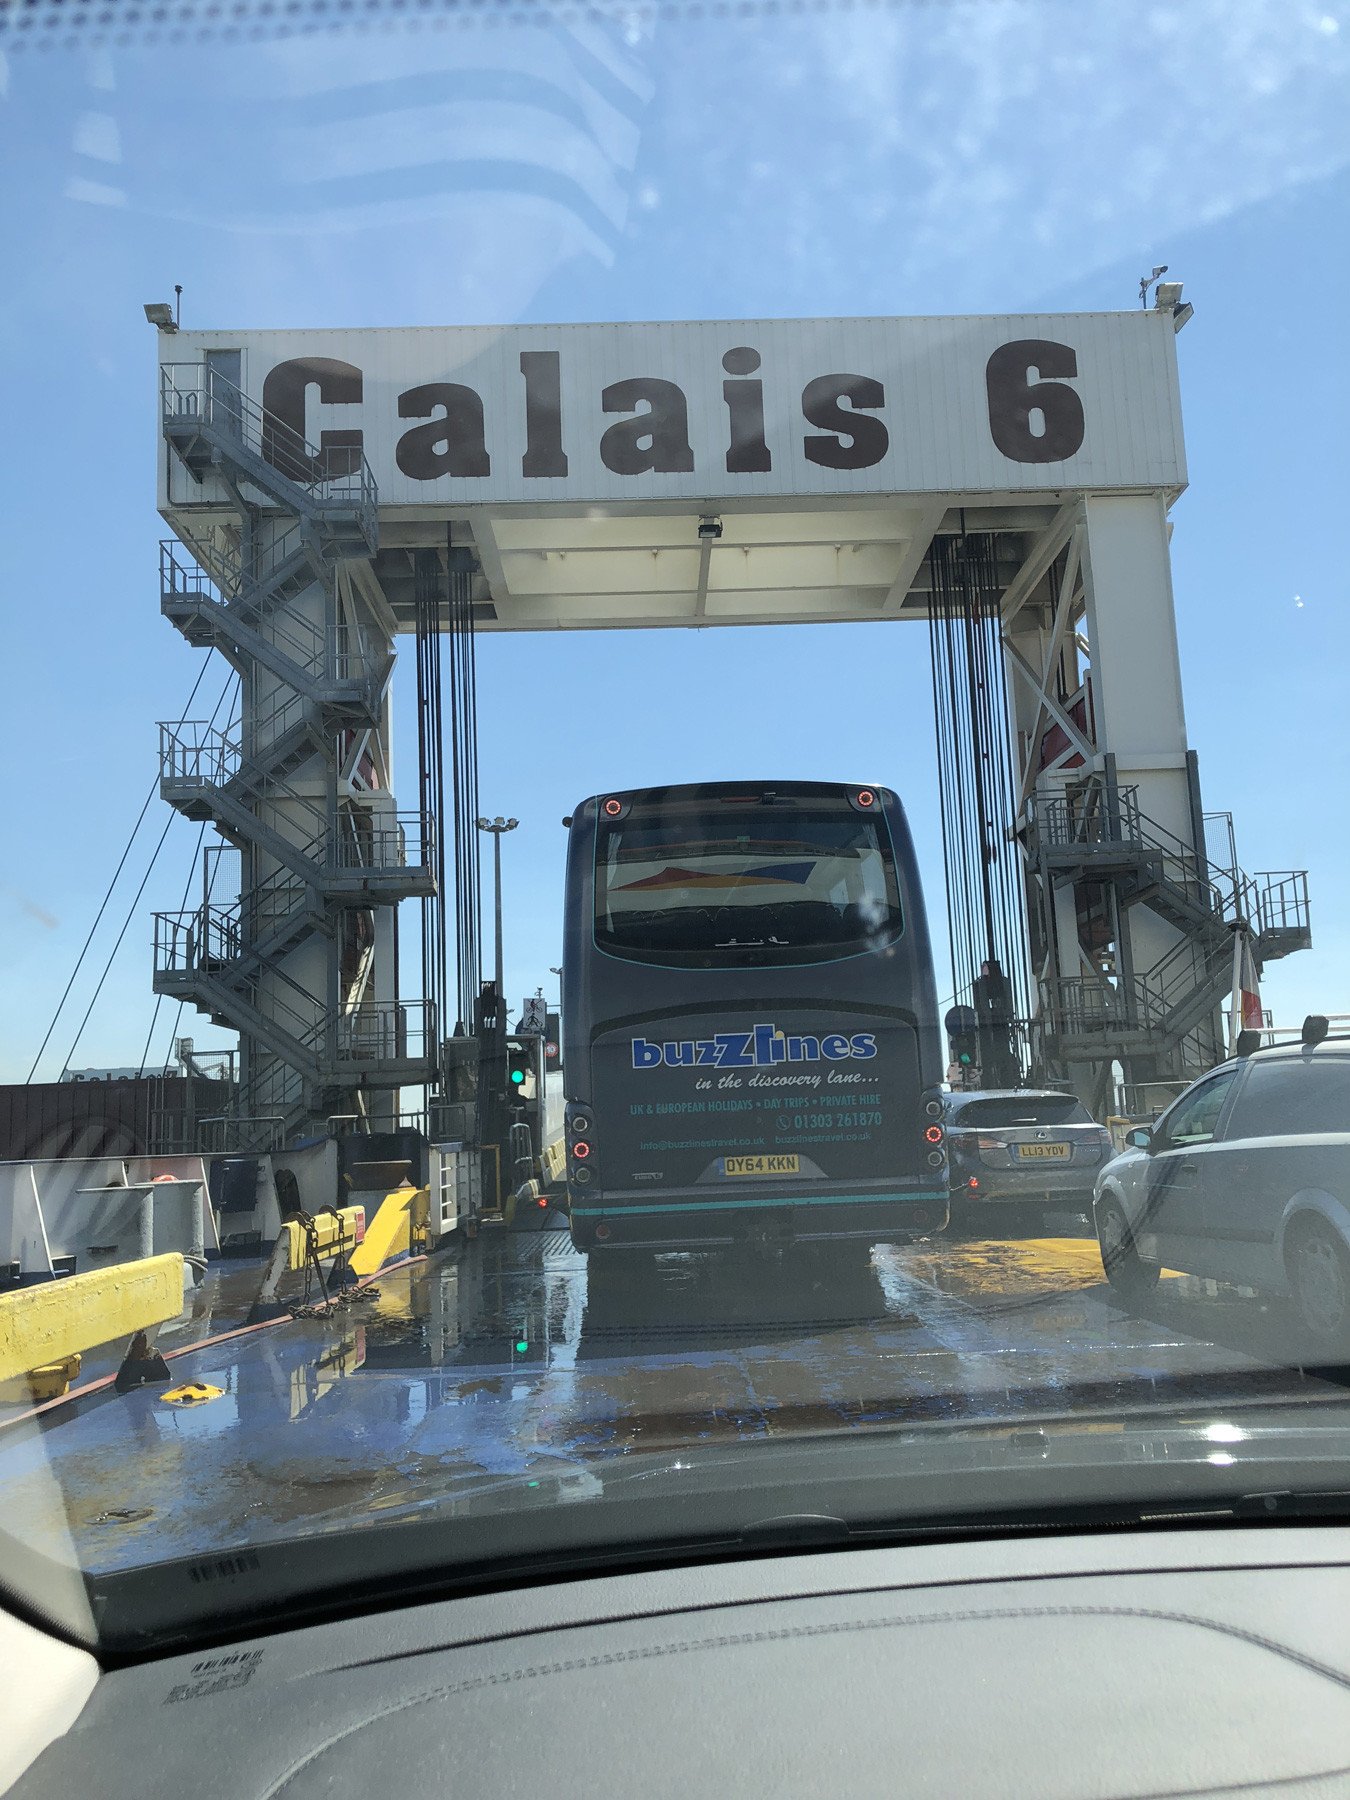 Arriving in Calais